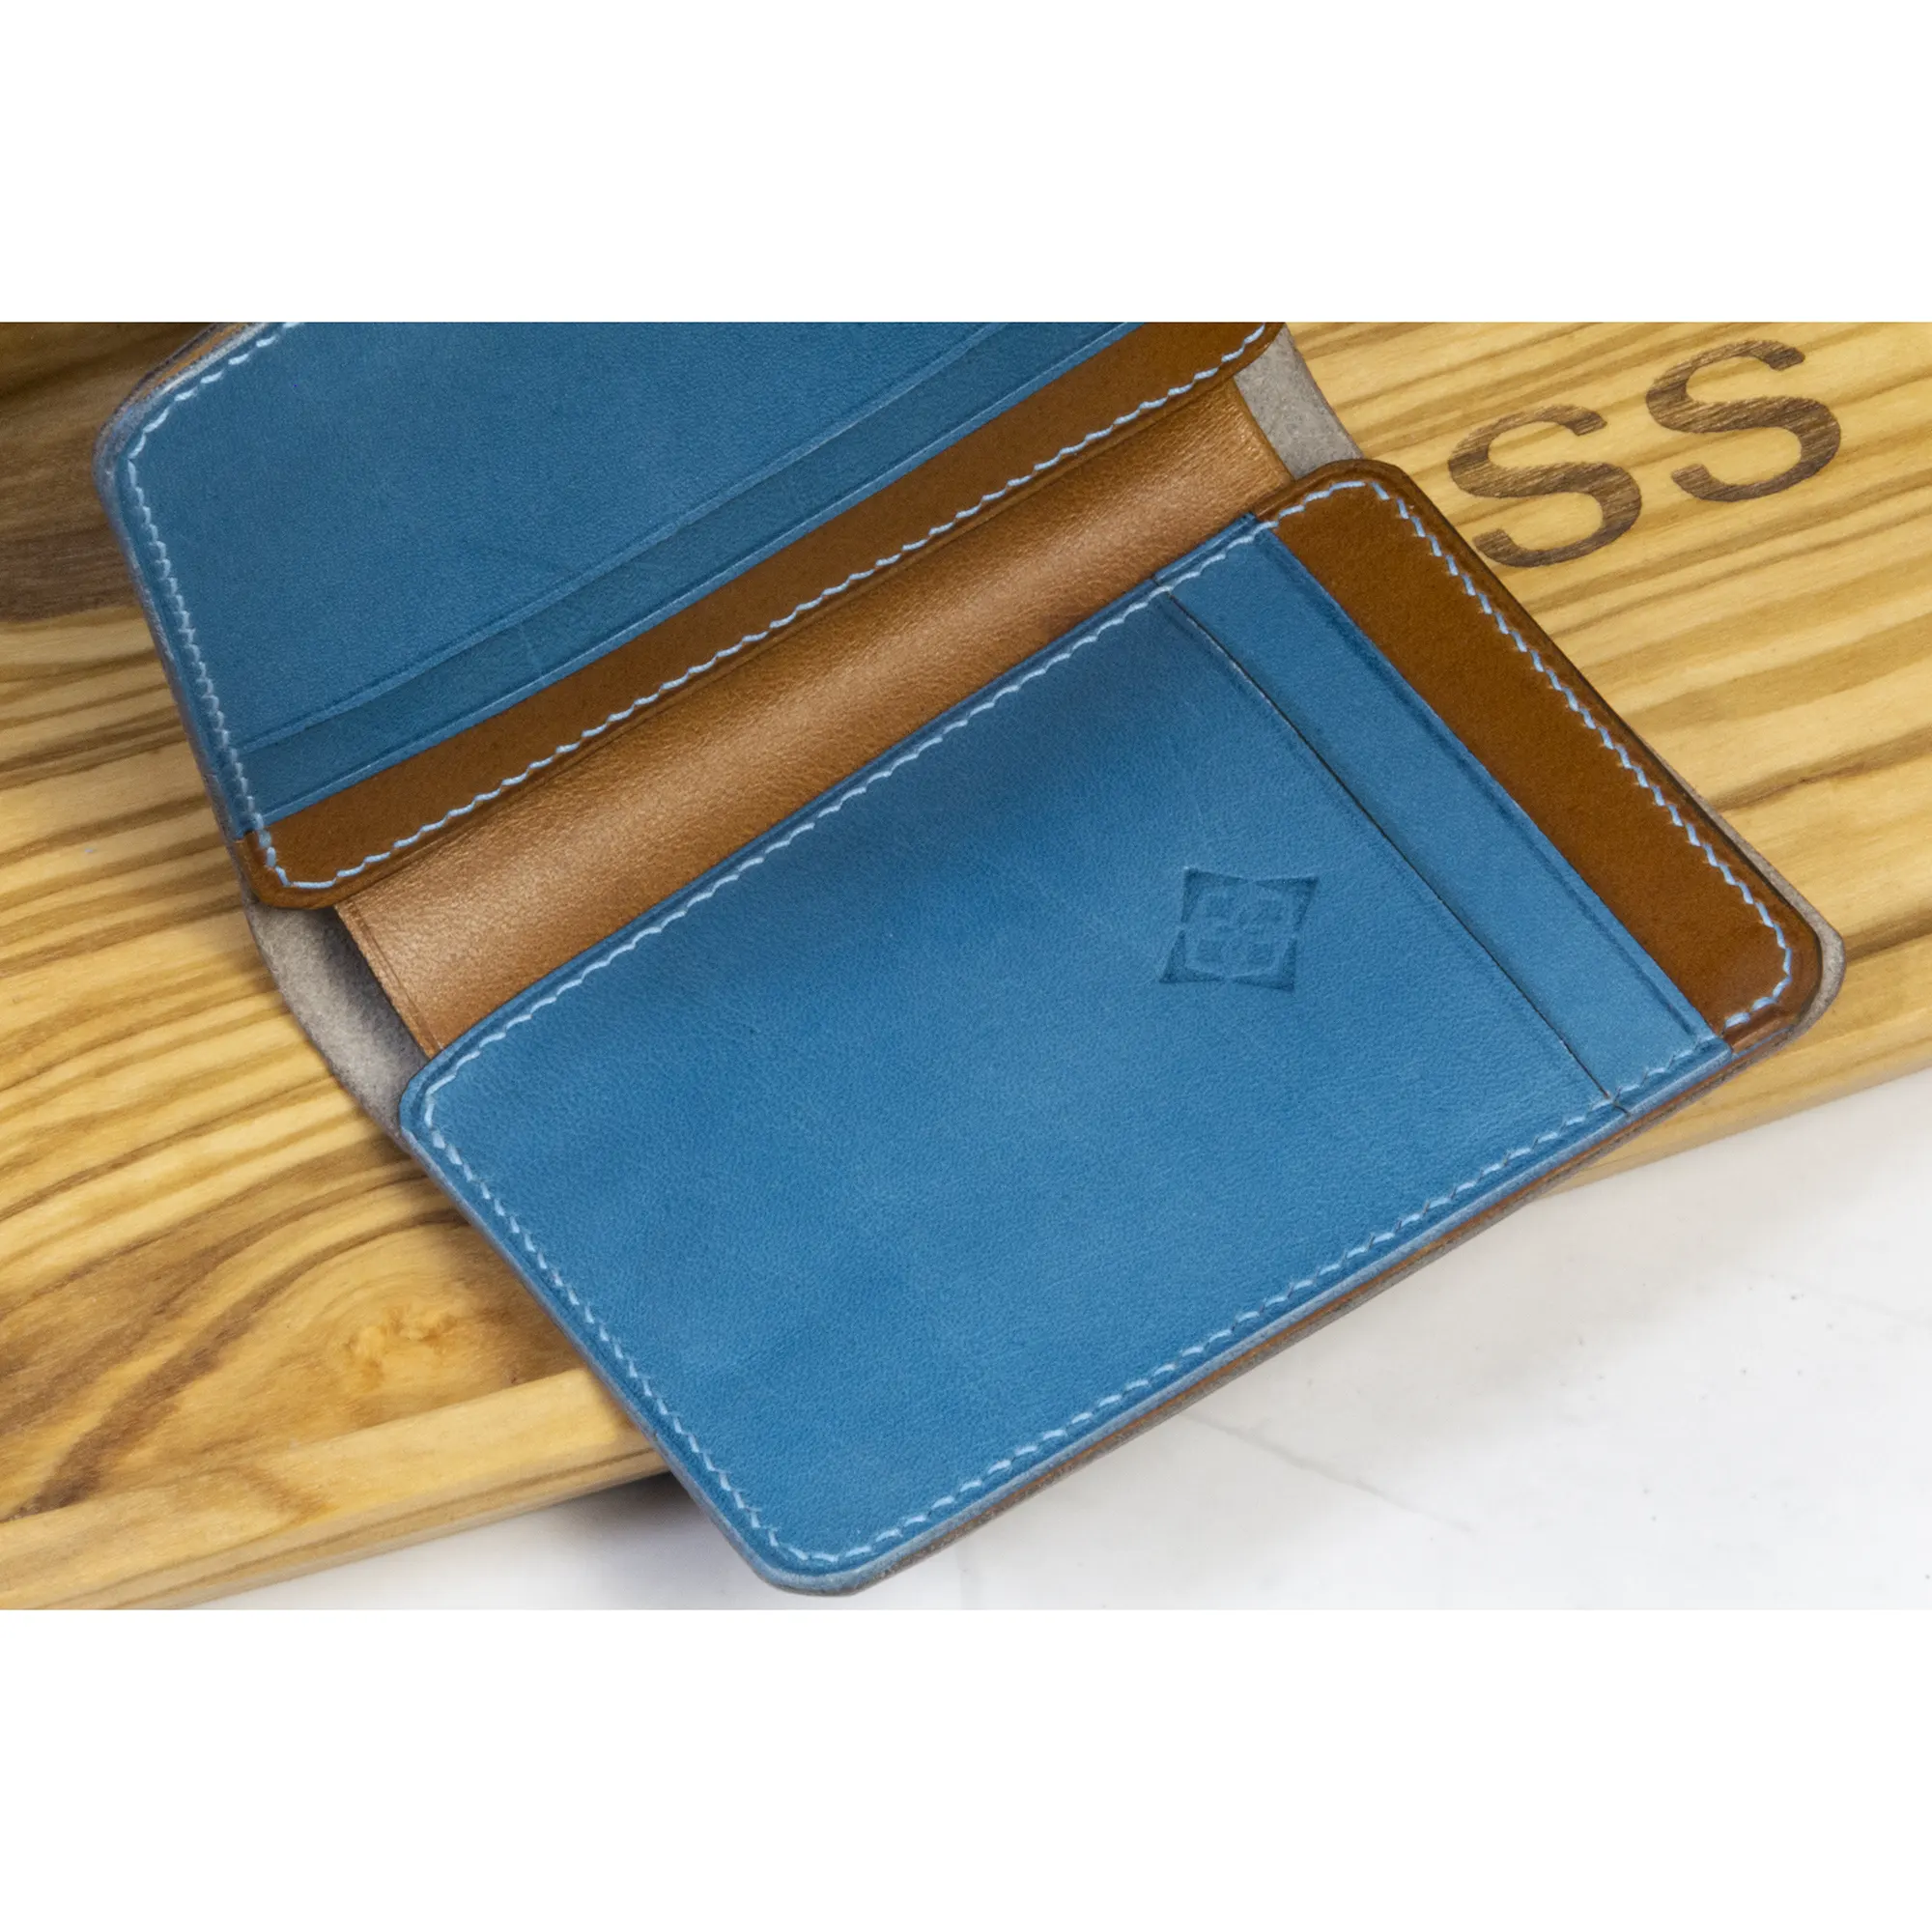 possala designs handmade in spain leather wallet blue brown grey